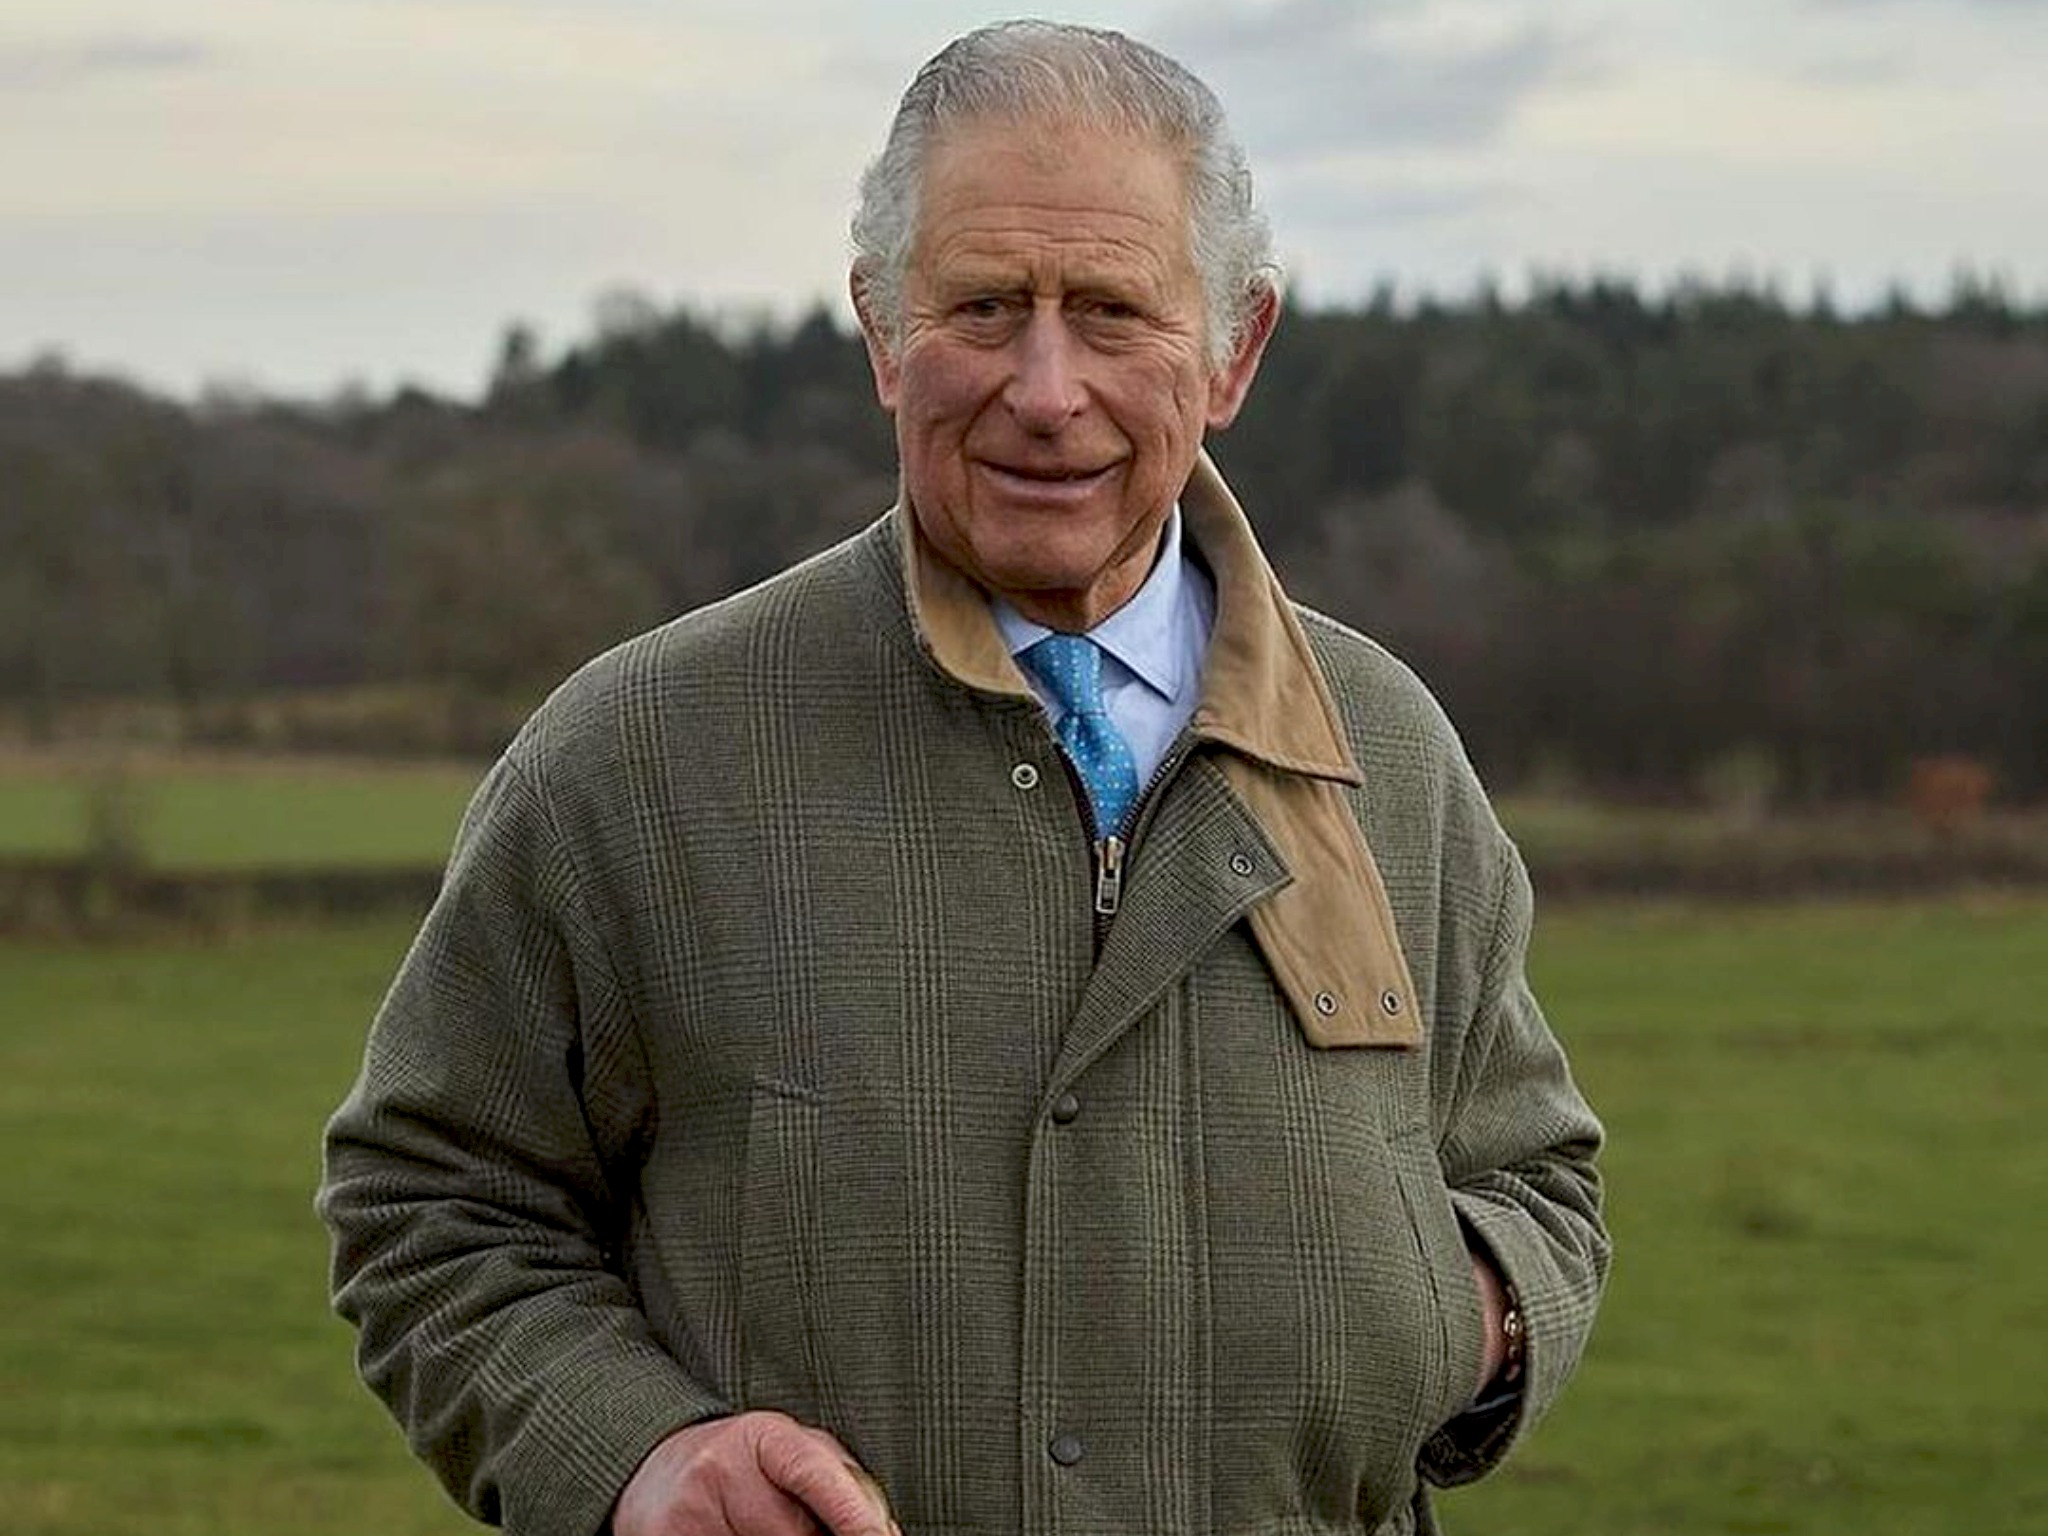 Raja Charles III Mengidap Kanker, Tugas Publik Dihentikan Sementara